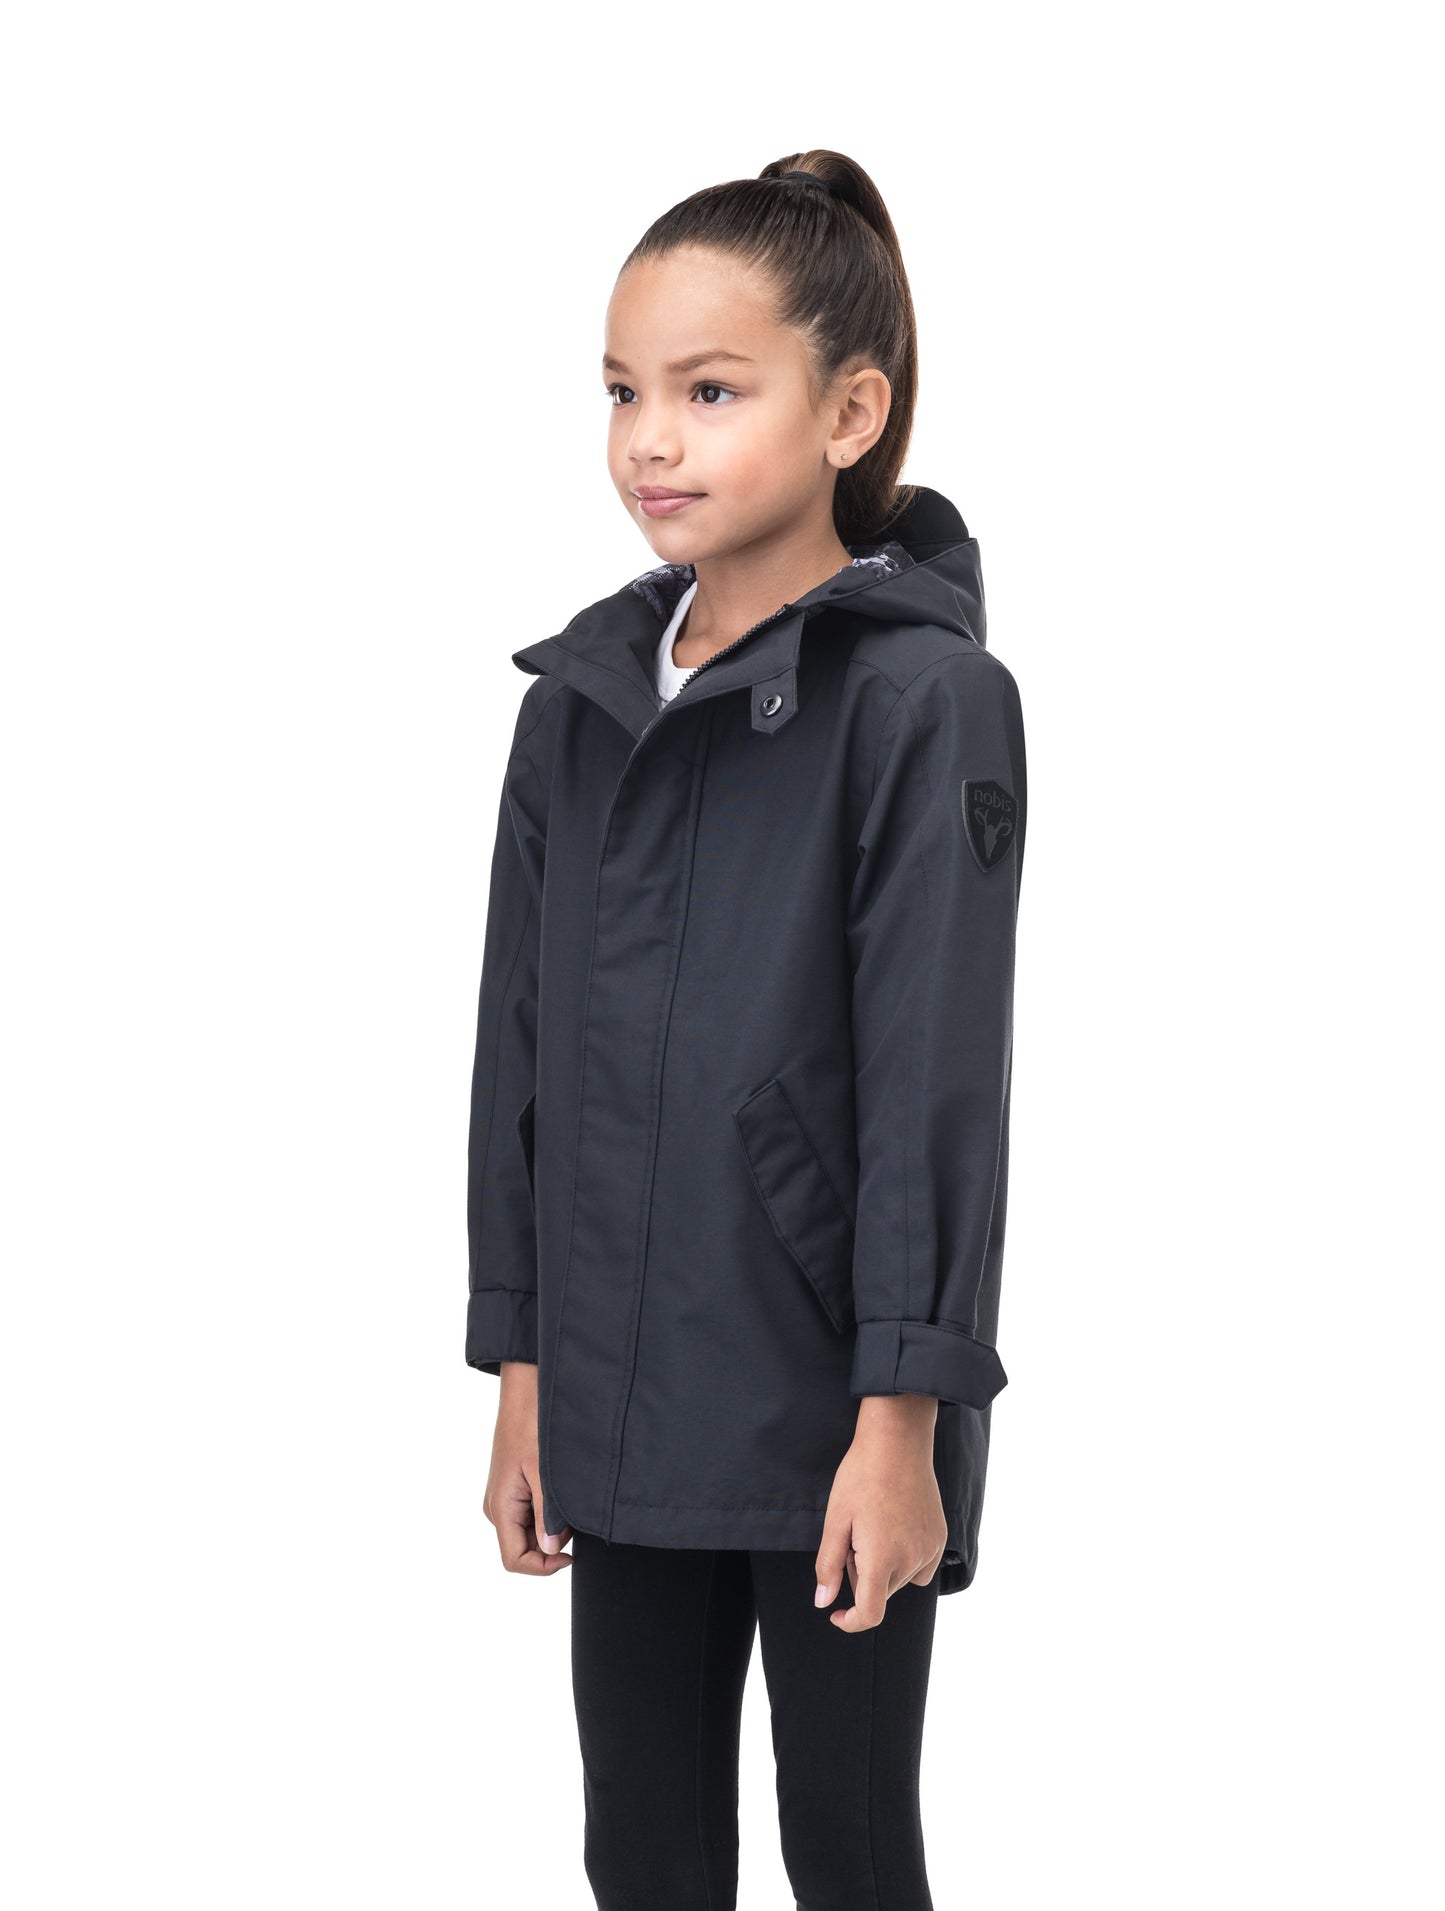 Kids' hip length raincoat with hood in Black